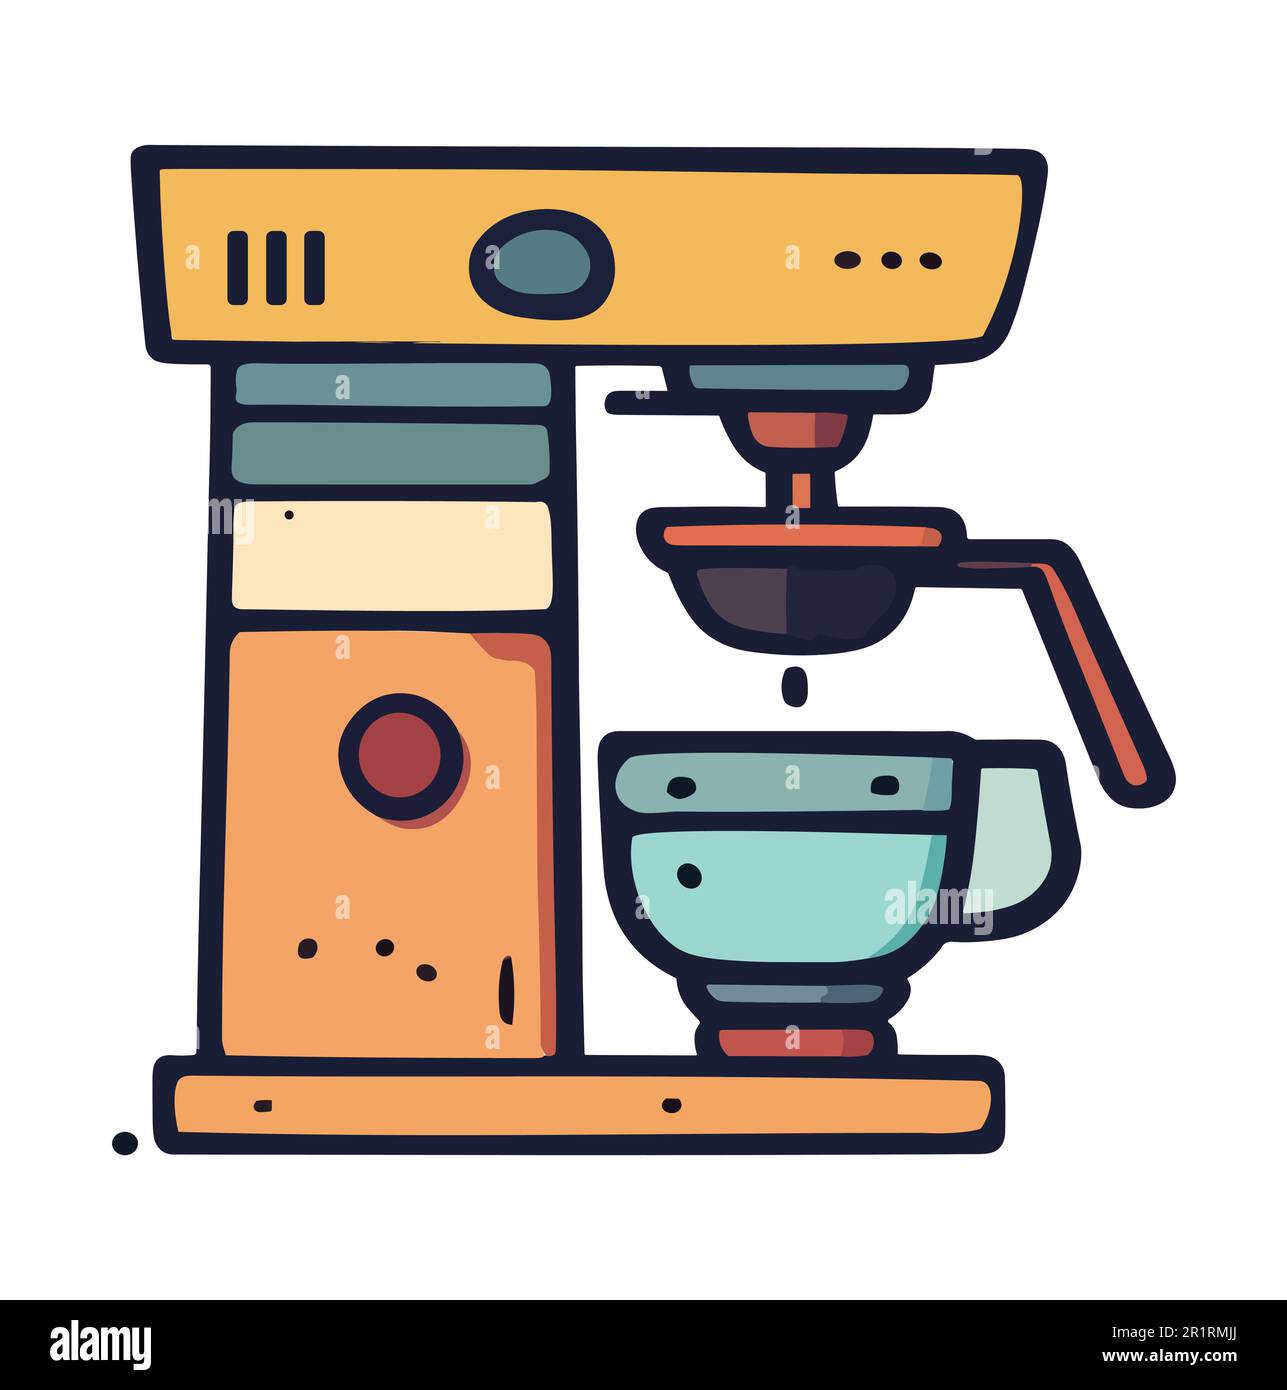 https://c8.alamy.com/comp/2R1RMJJ/retro-coffee-maker-vintage-coffee-machine-vector-2R1RMJJ.jpg